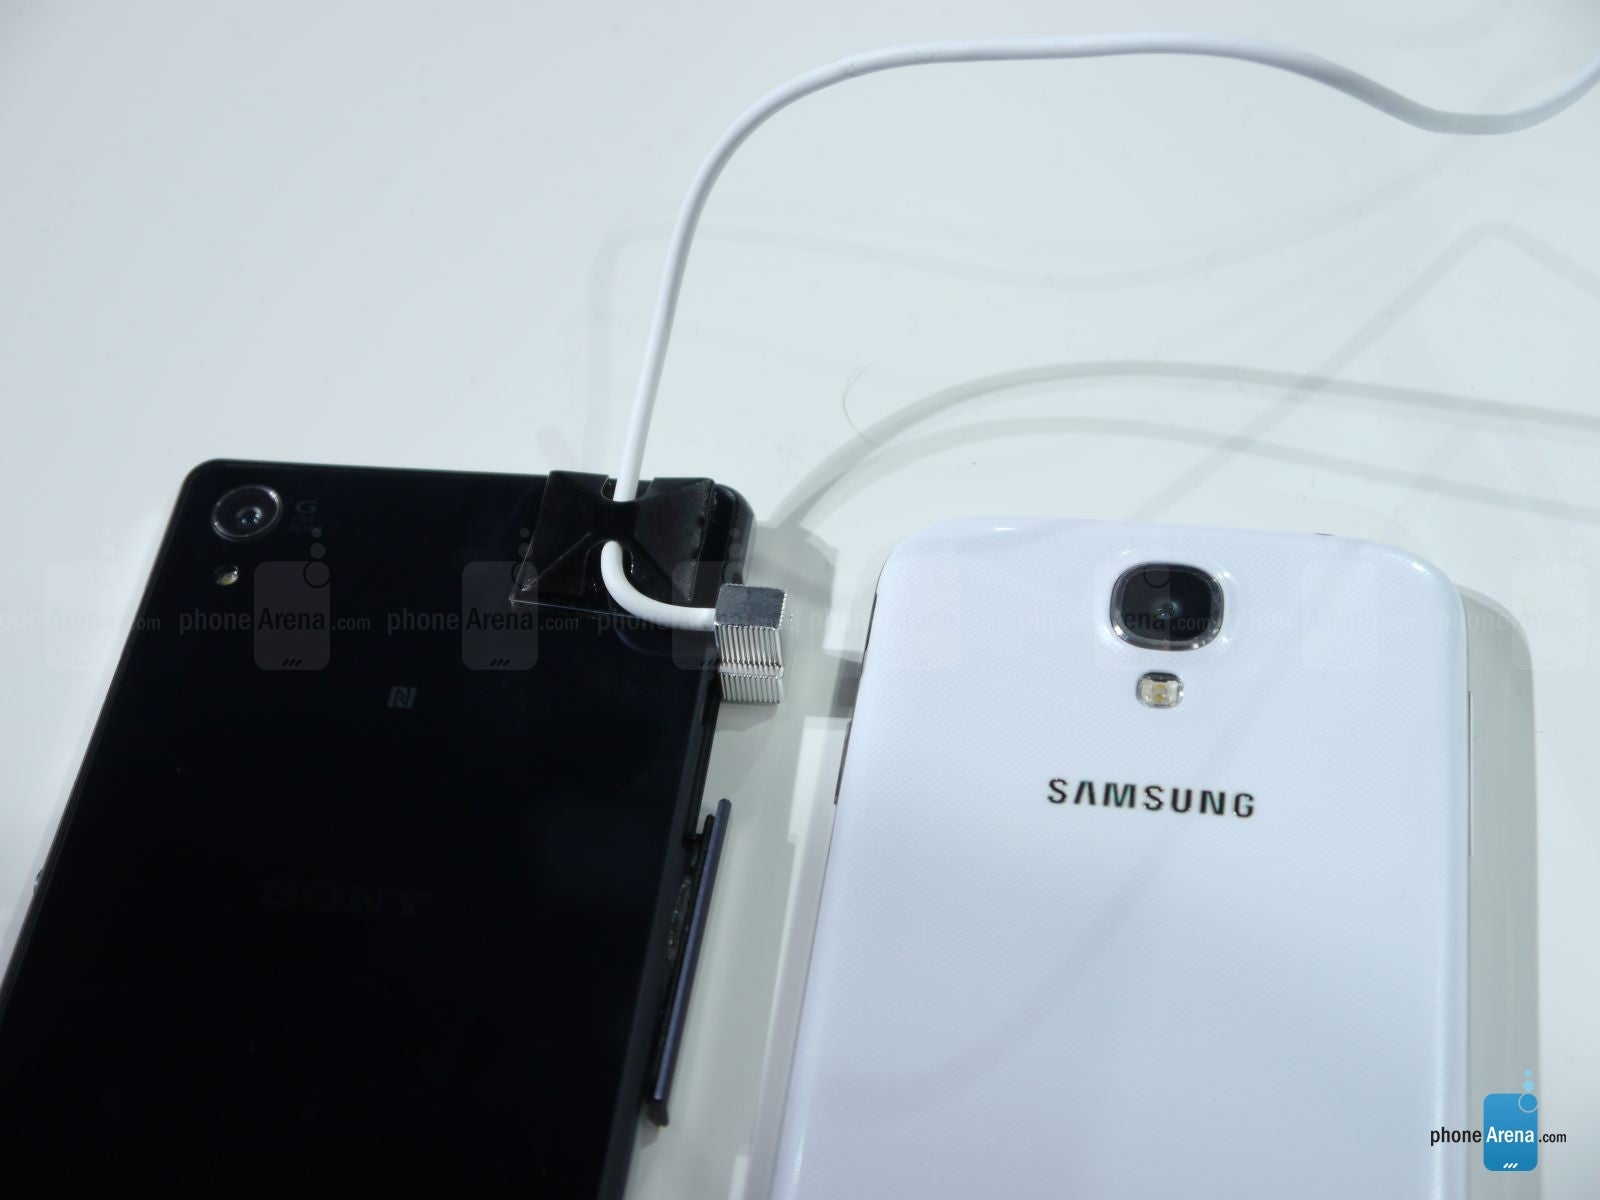 Sony Xperia Z2 vs Samsung Galaxy S4: first look